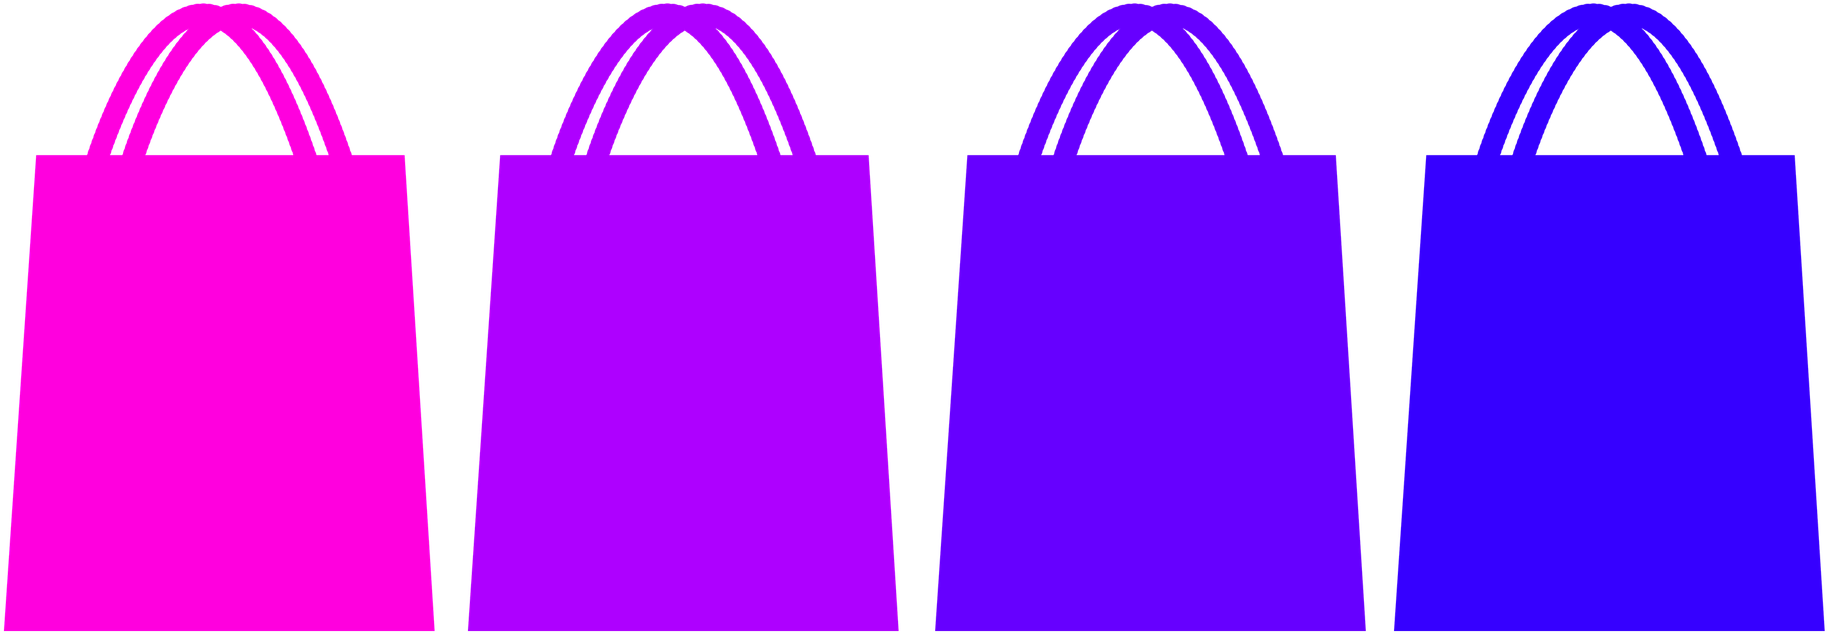 Where To Buy Reusable Shopping Bags - Bag Shop Png (1280x477)